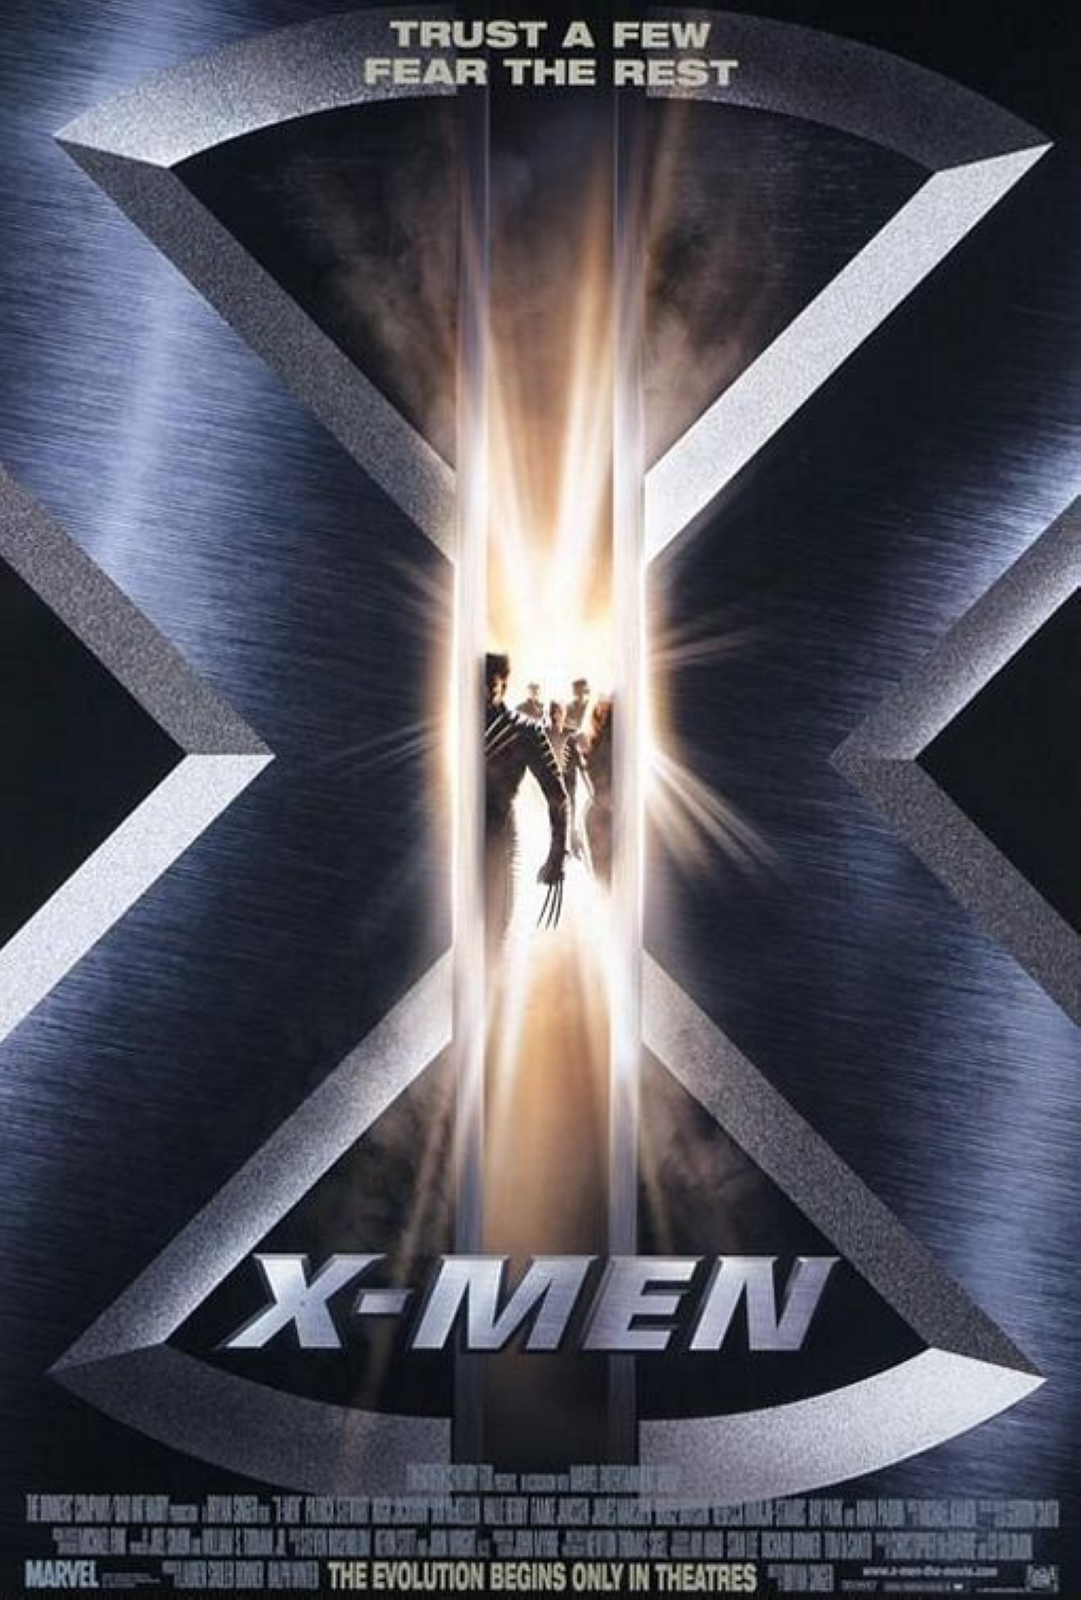 X-MEN 1 (2000) ศึกมนุษย์พลังเหนือโลก ภาค 1 Patrick Stewart